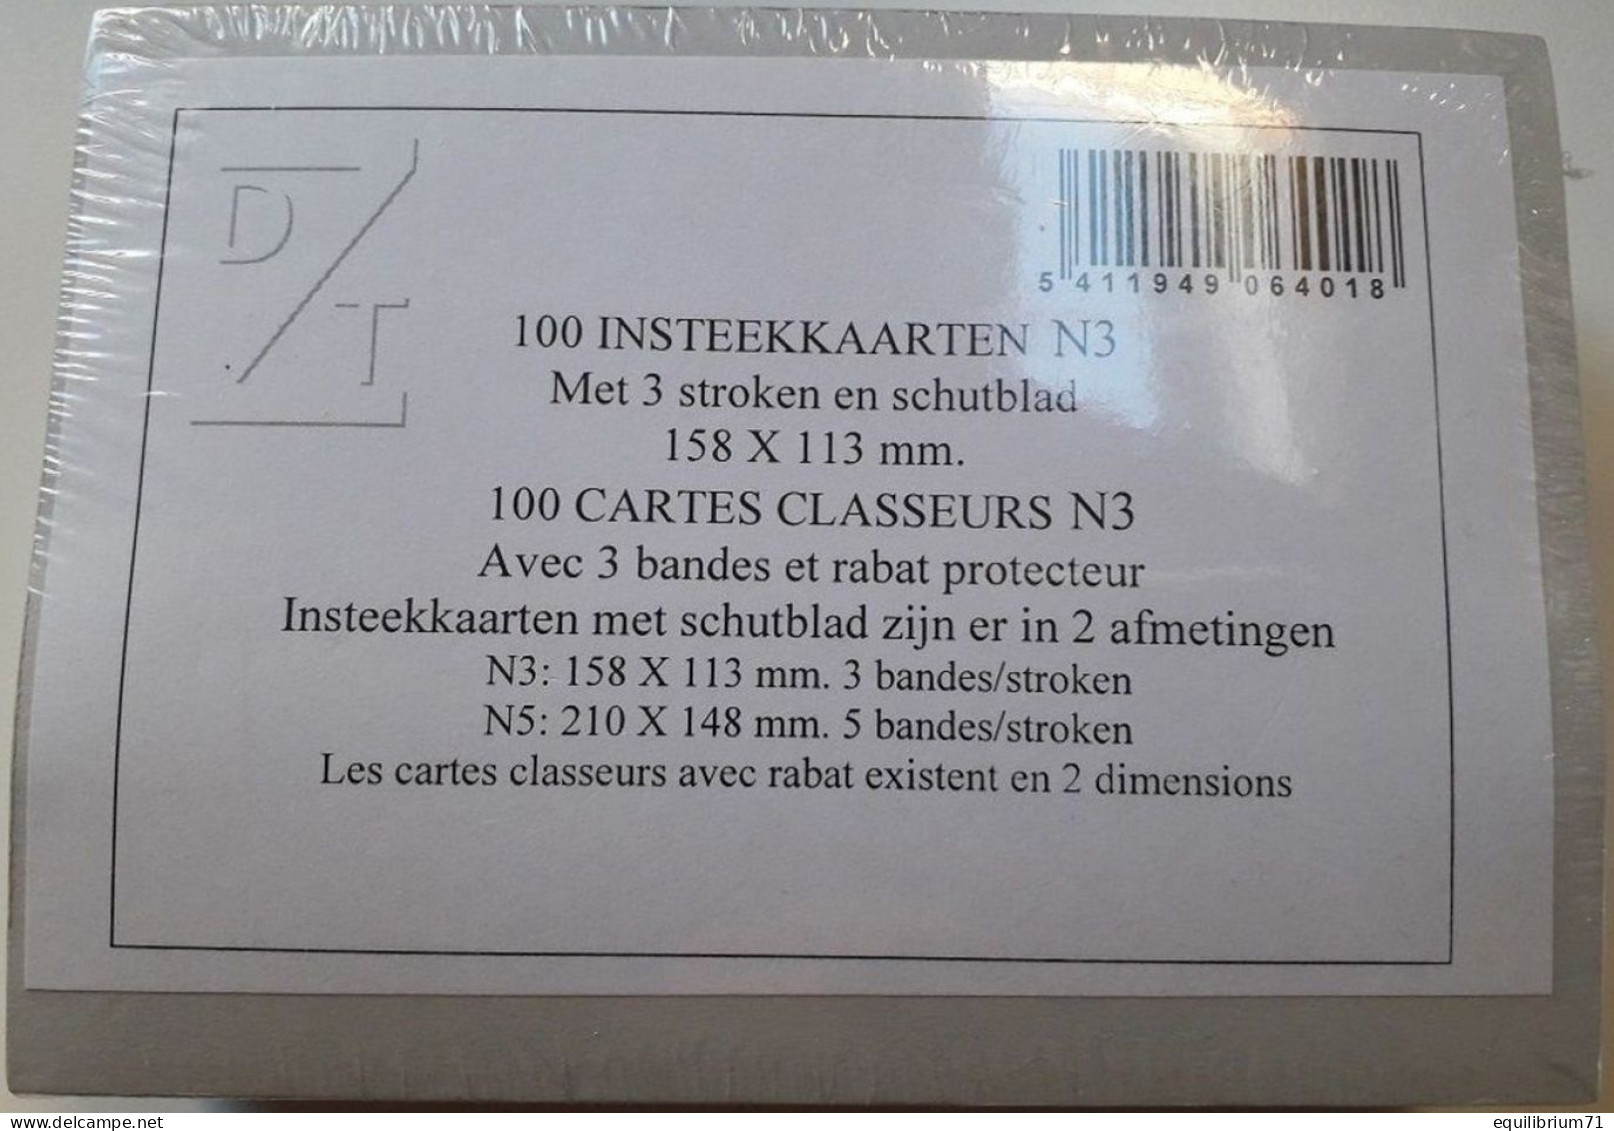 100 Cartes Classeurs / Insteekkaarten / Karten Einlegen / Insert Cards - DZT N3 - Cartes De Stockage